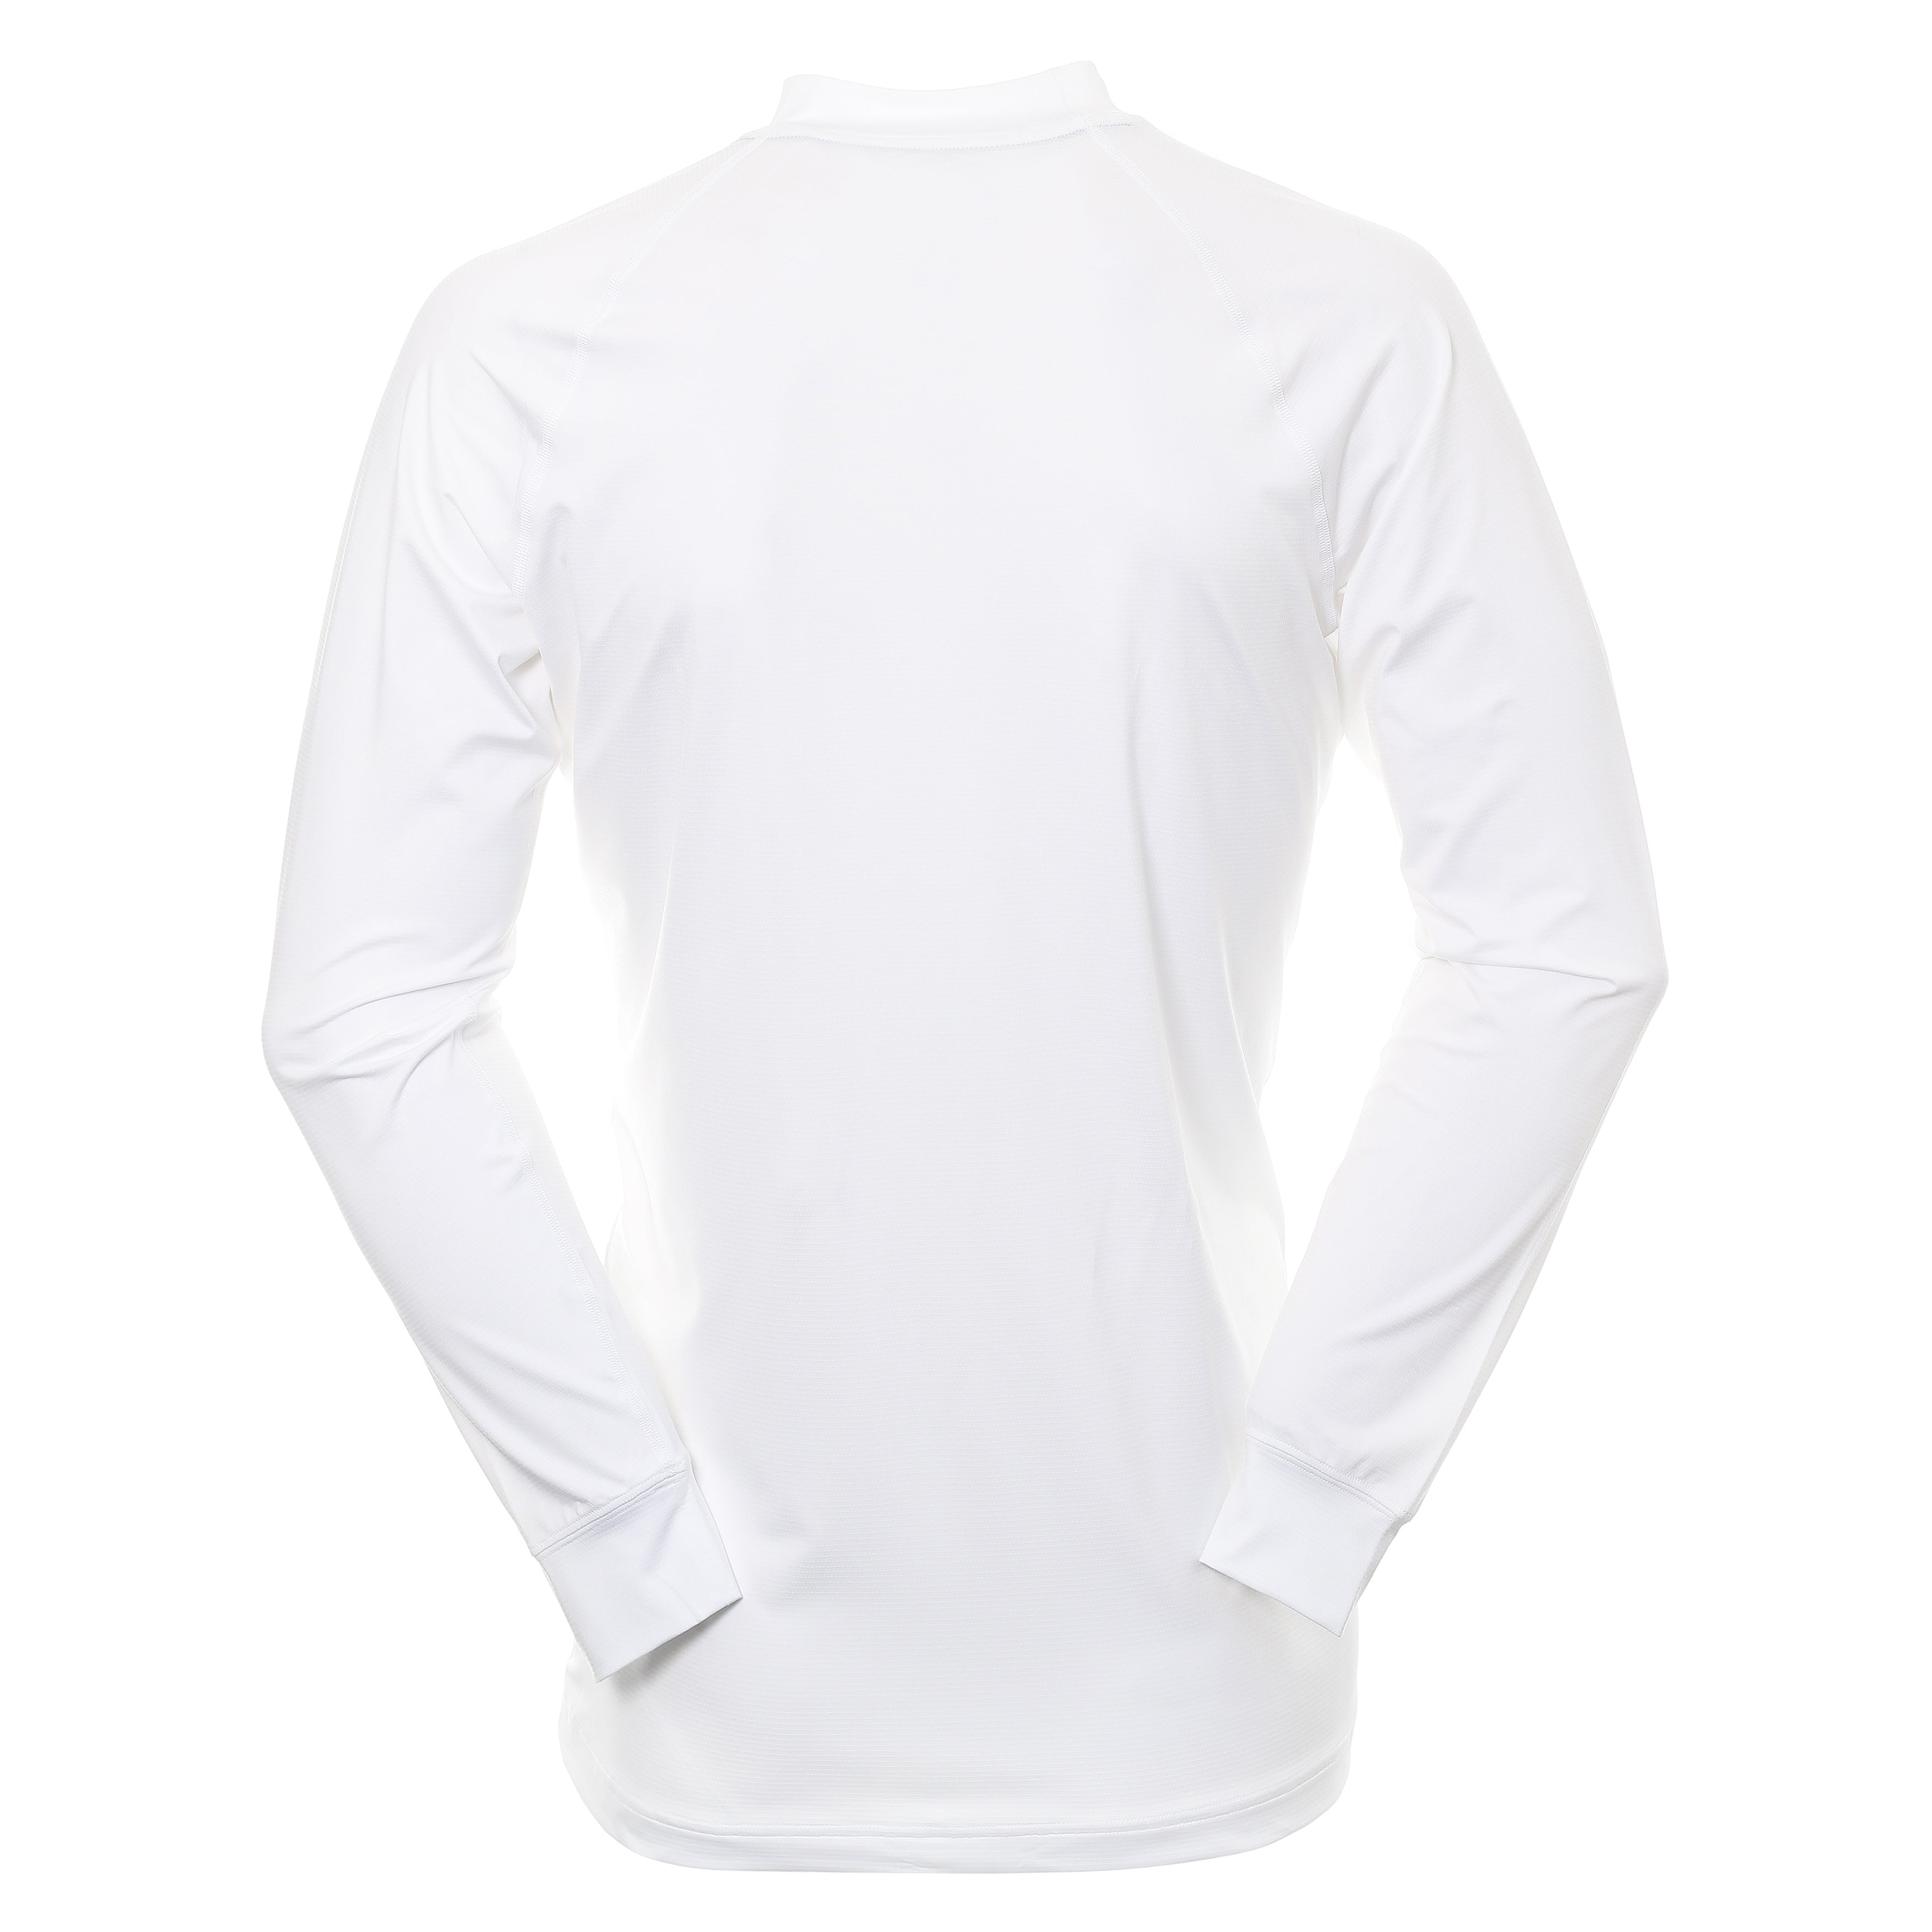 Nike Team Stock Vapor Varsity V Neck Short Sleeve Jersey White- Mens- Size L